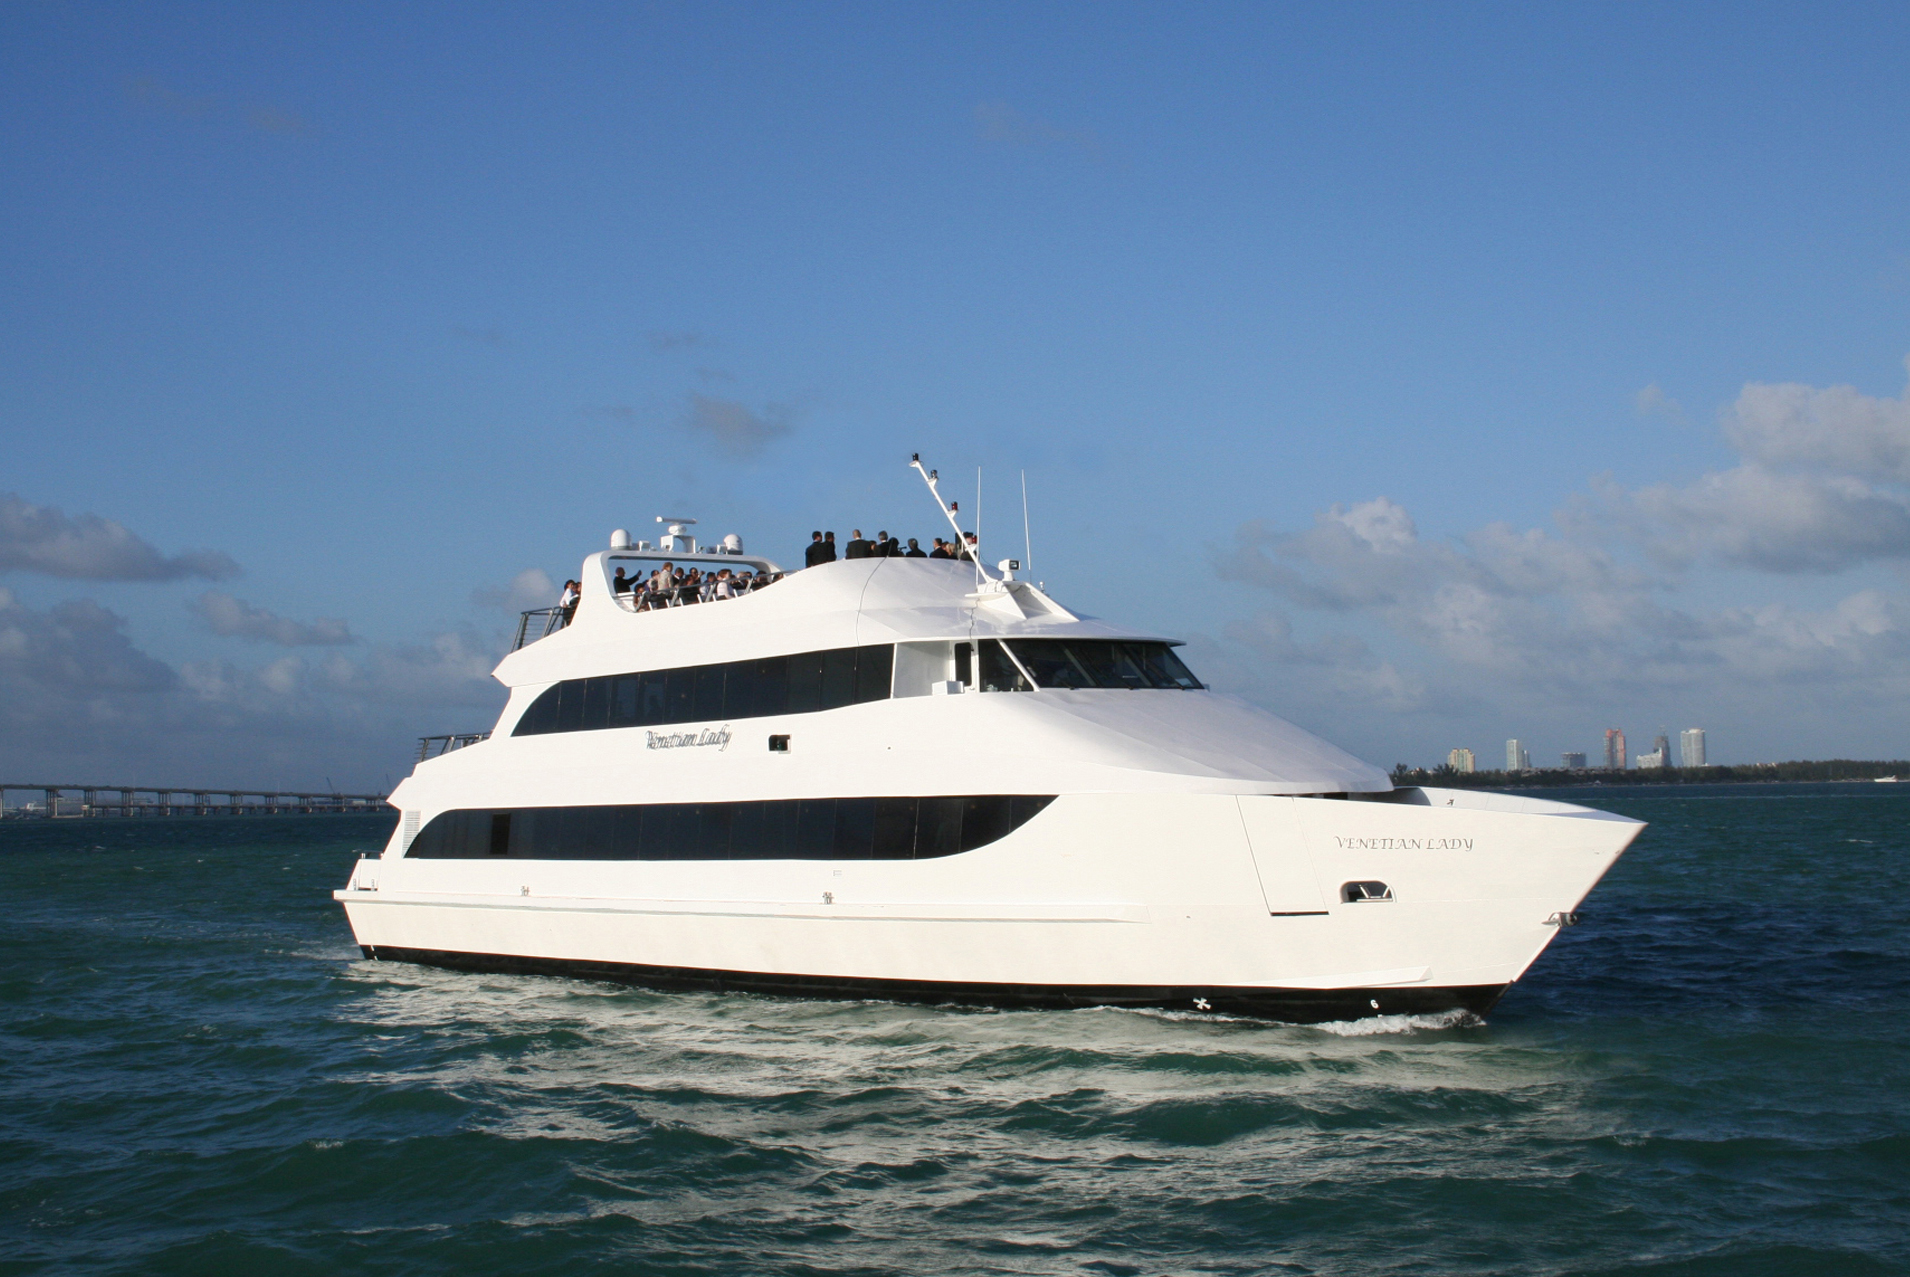 Venetian Lady - Luxury Yacht